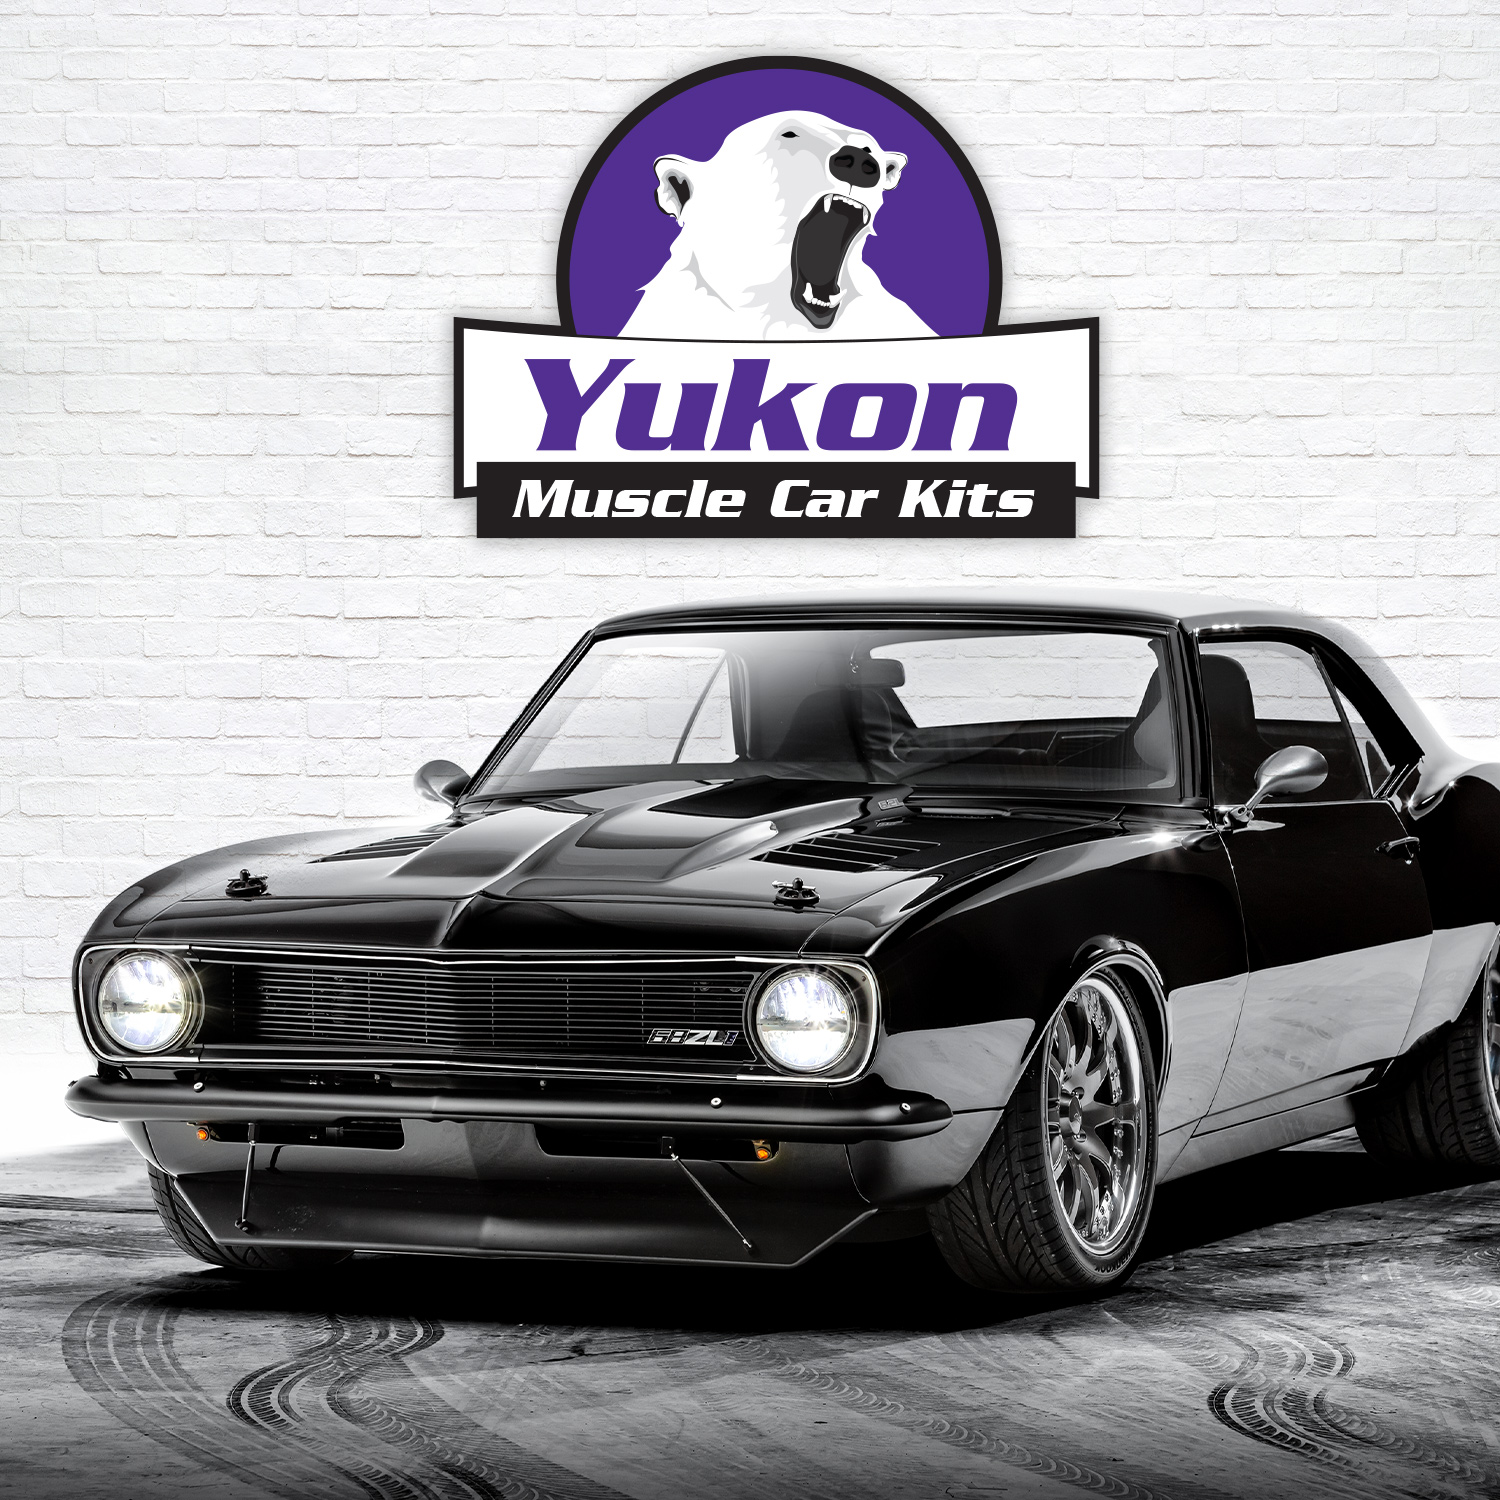 Yukon Muscle Car Limited Slip & Re-Gear Kit for Ford 8”, 25 spline, 3.80 ratio 